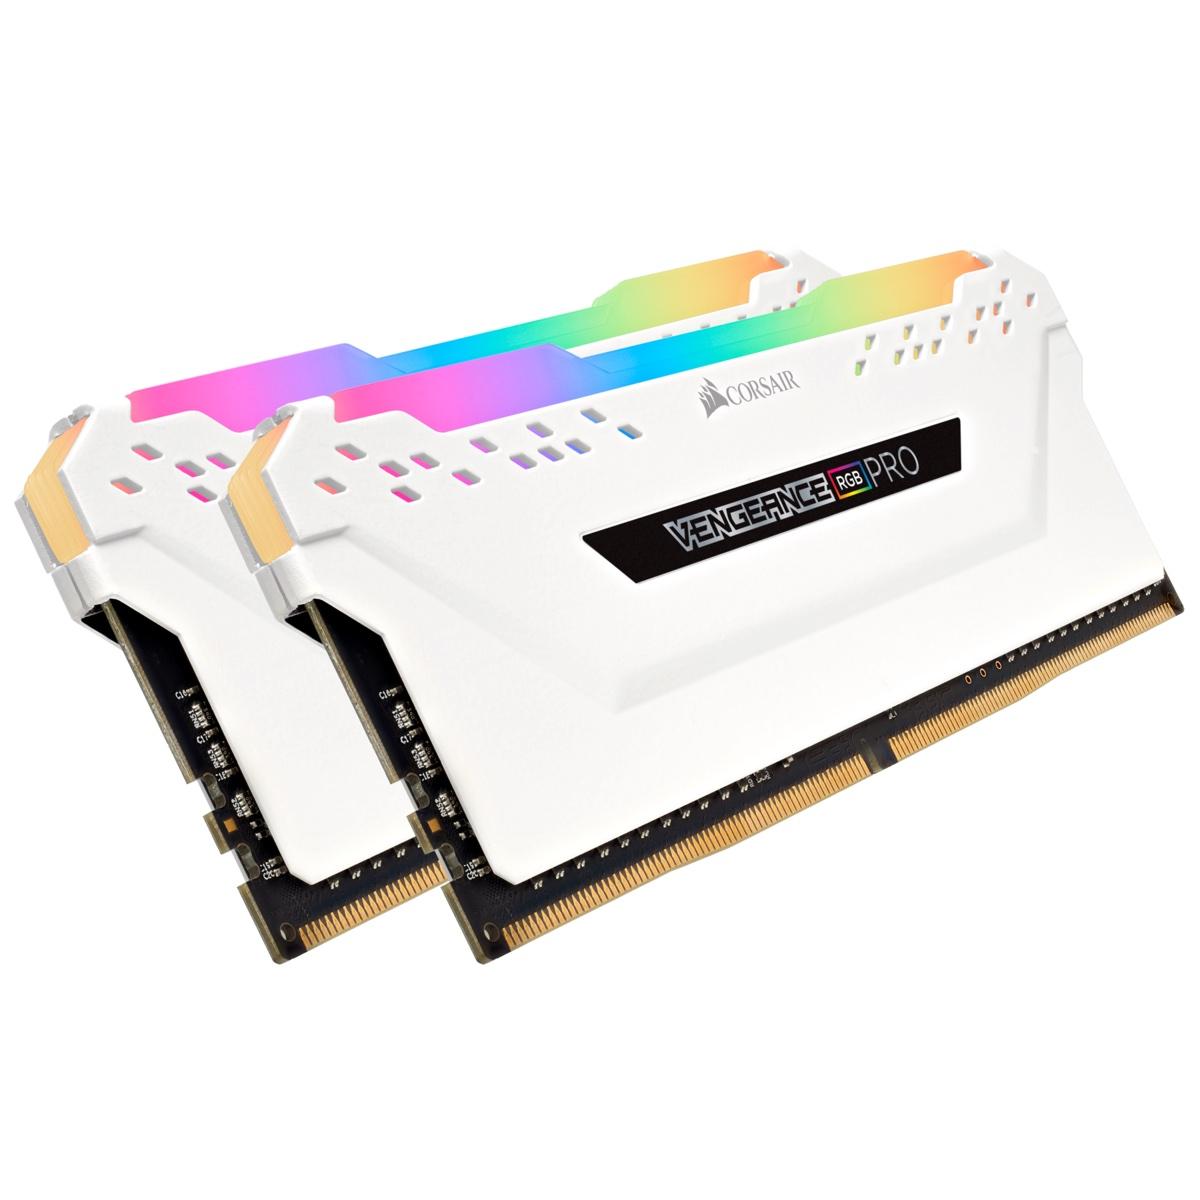 Памет Corsair Vengeance PRO RGB White 16GB(2x8GB) DDR4 PC4-25600 3200MHz CL16 CMW16GX4M2C3200C16W